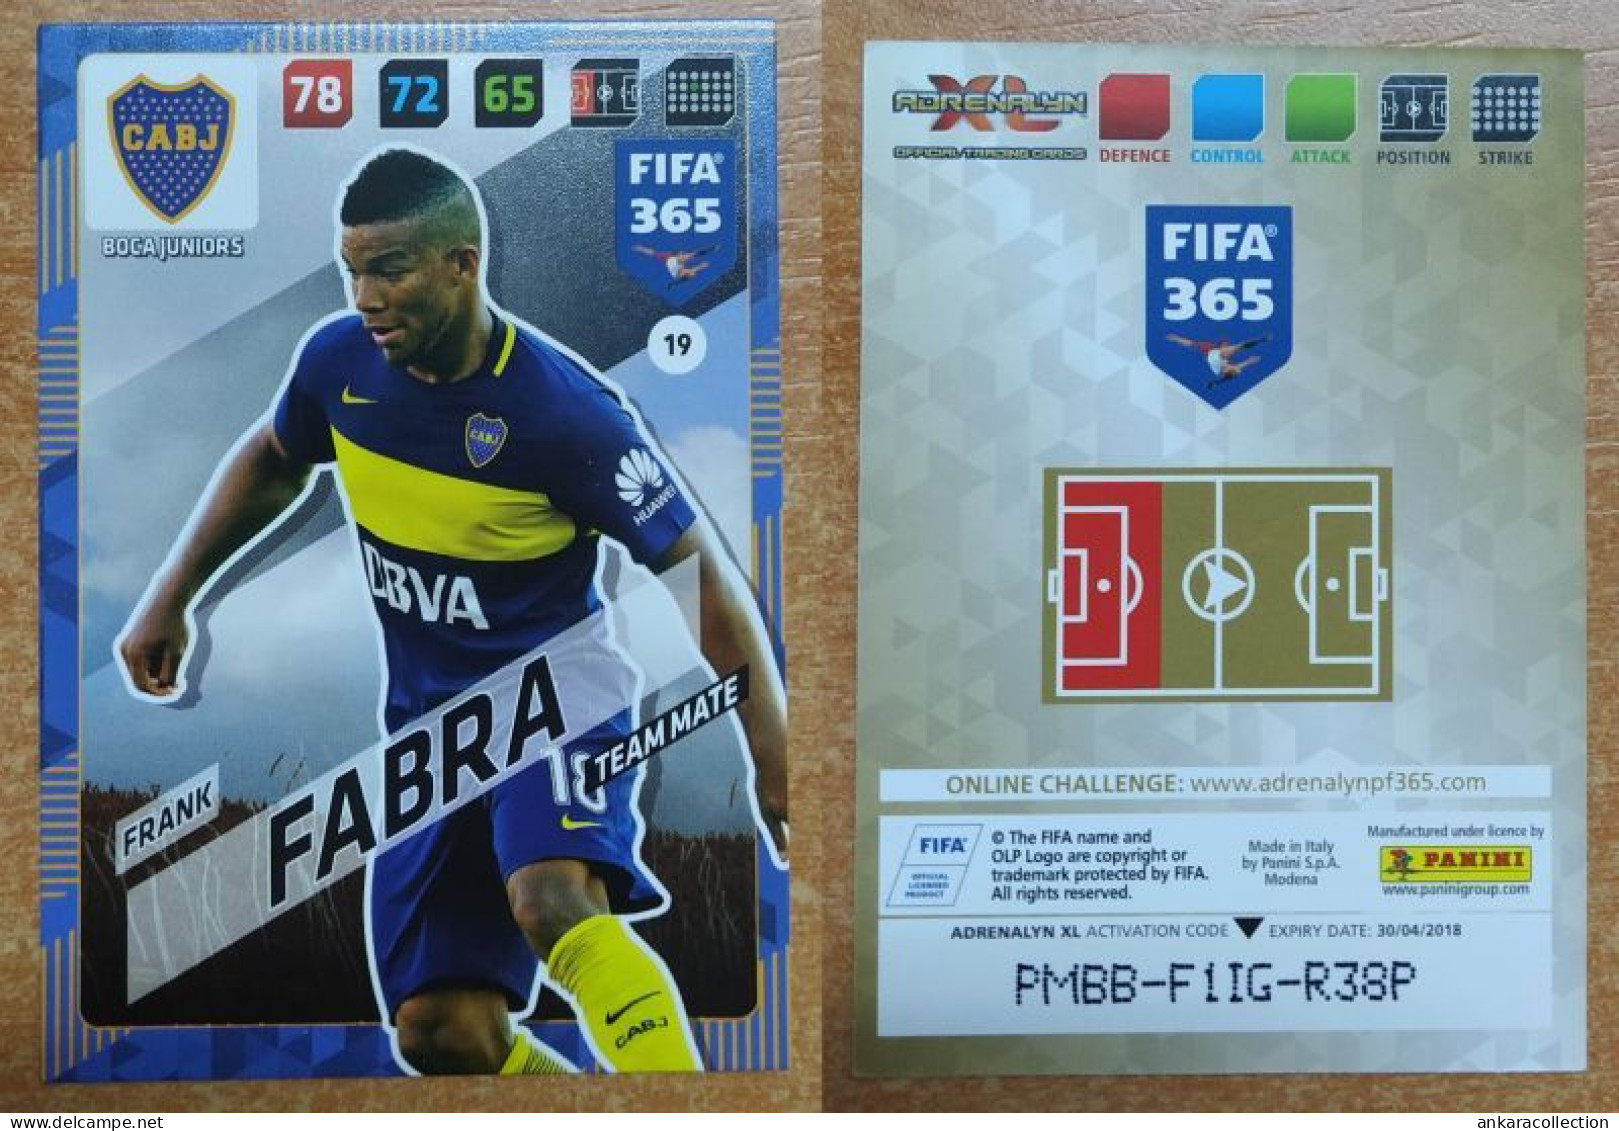 AC - 19 FRANK FABRA  BOCA JUNIORS  TEAM MATE  PANINI FIFA 365 2018 ADRENALYN TRADING CARD - Tarjetas